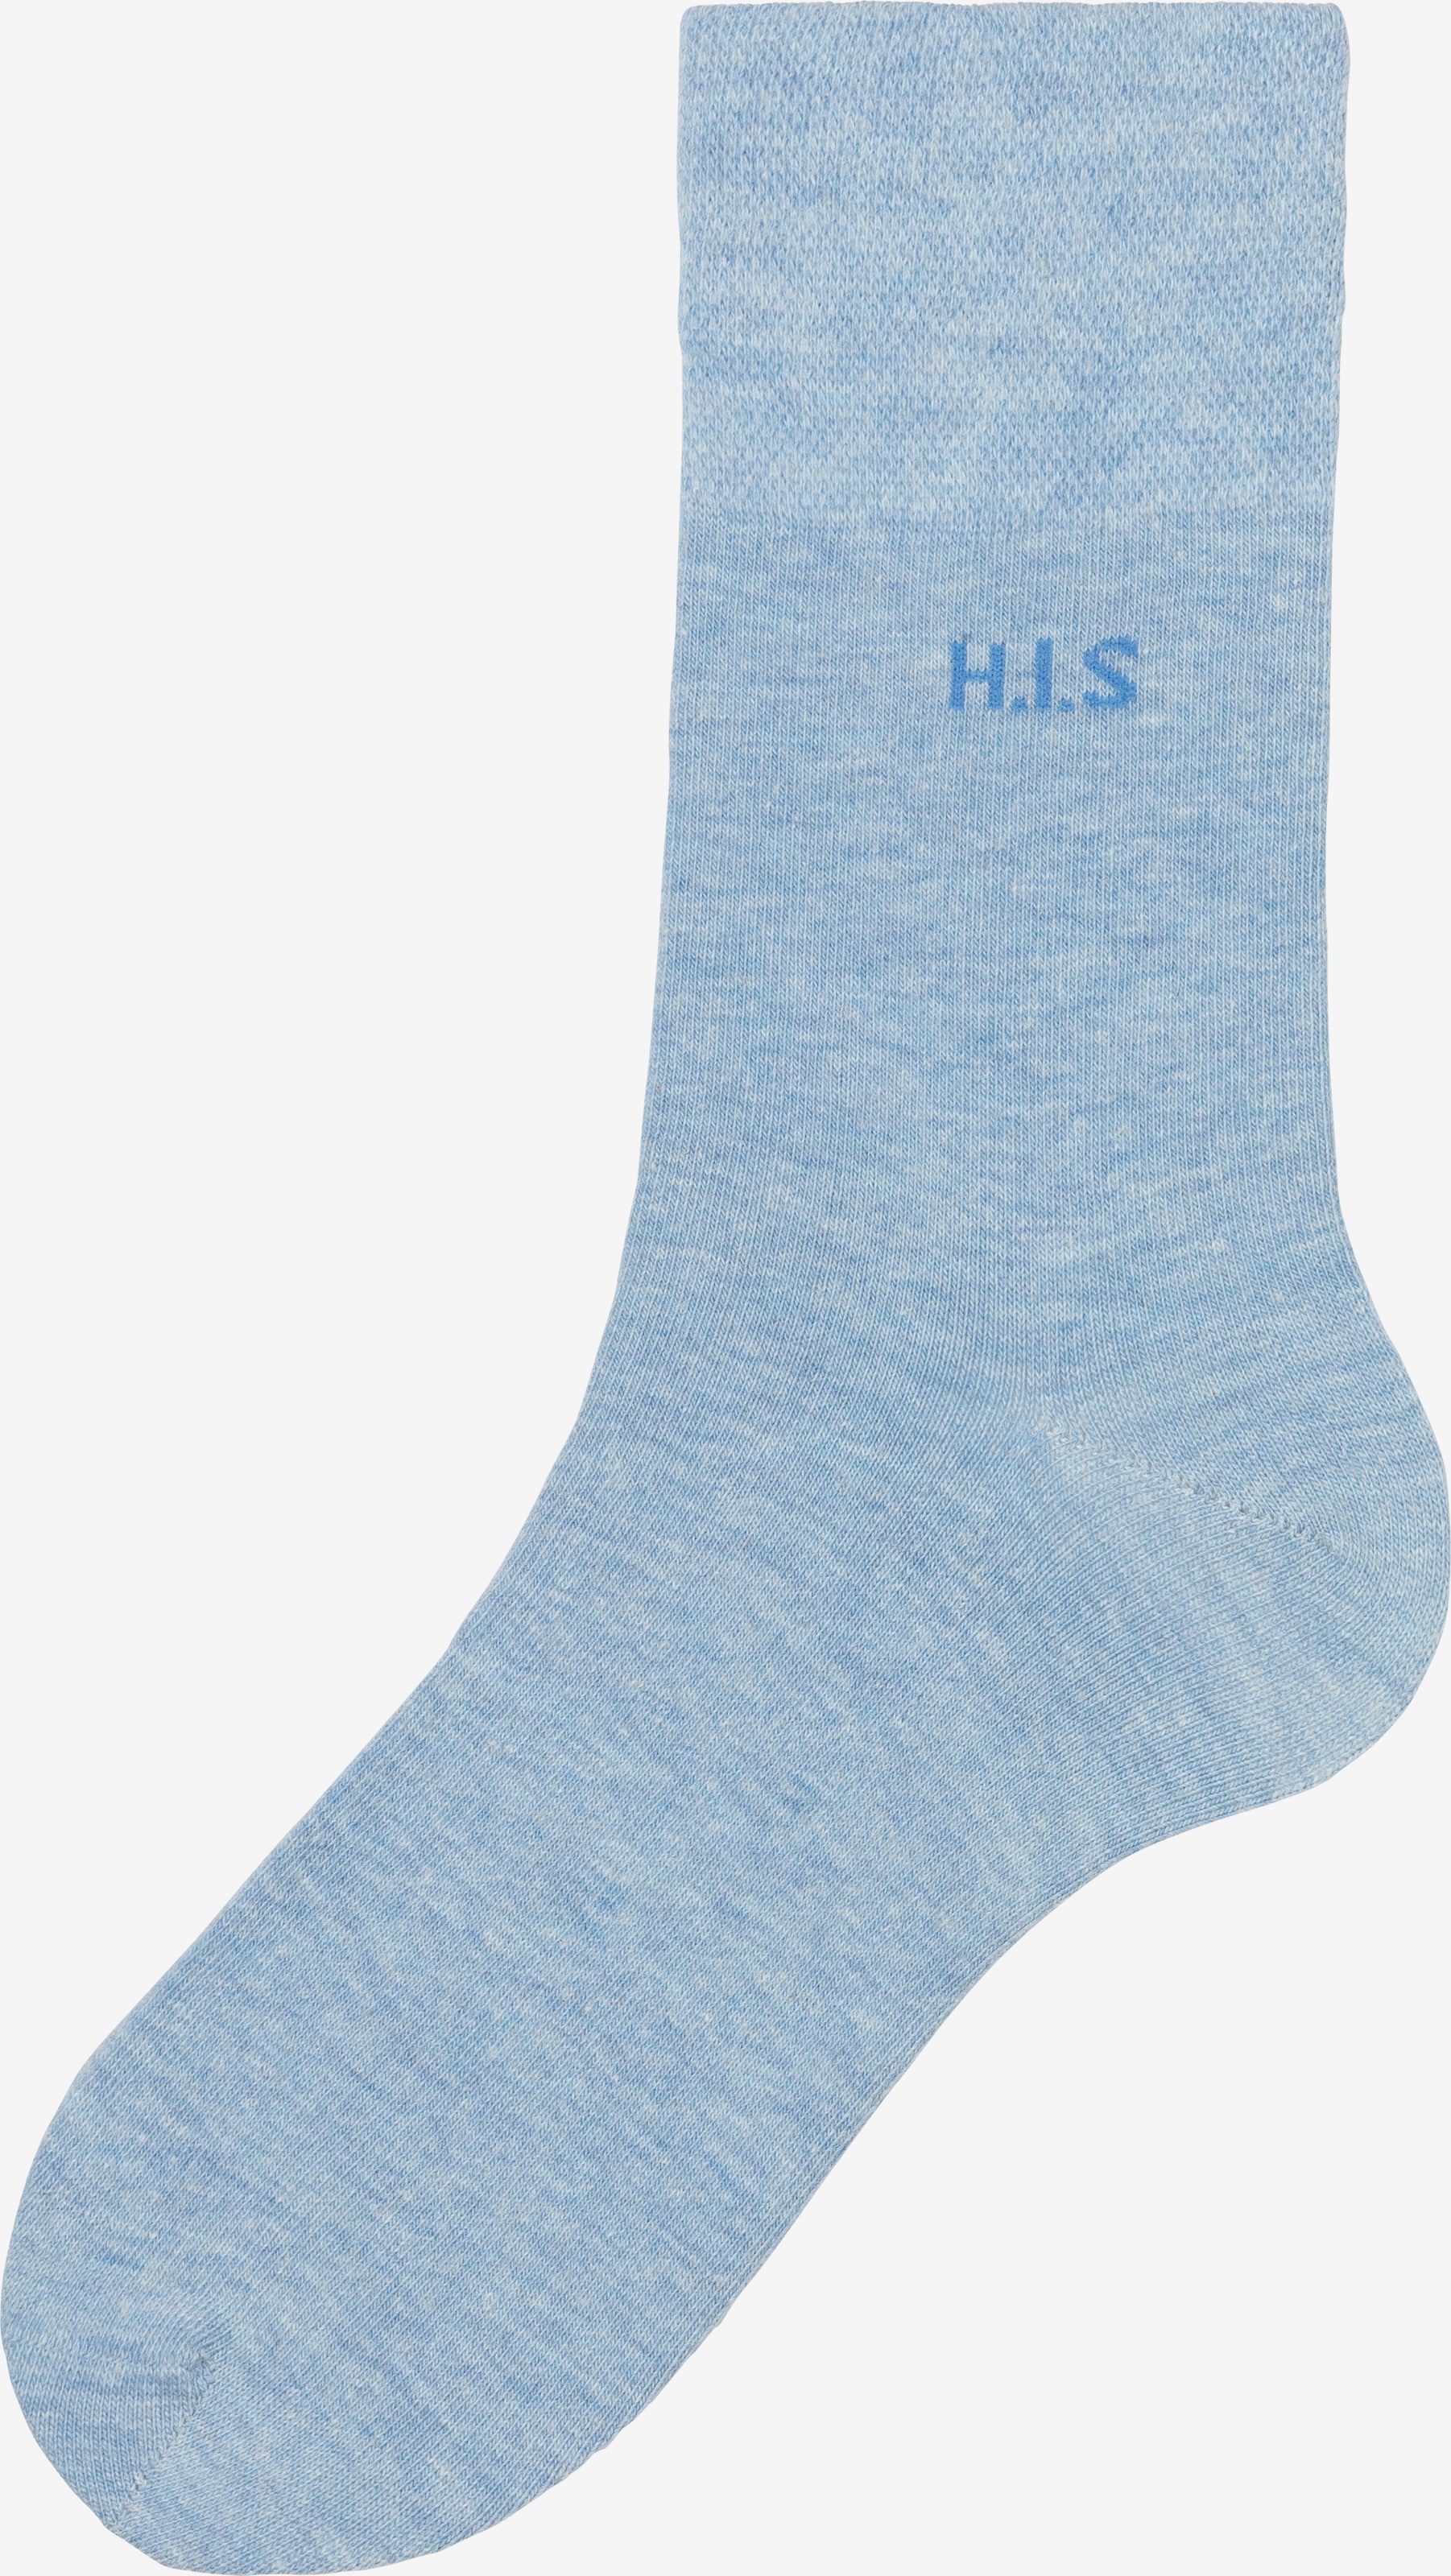 | in H.I.S Hellblau, ABOUT Dunkelblau Socken YOU